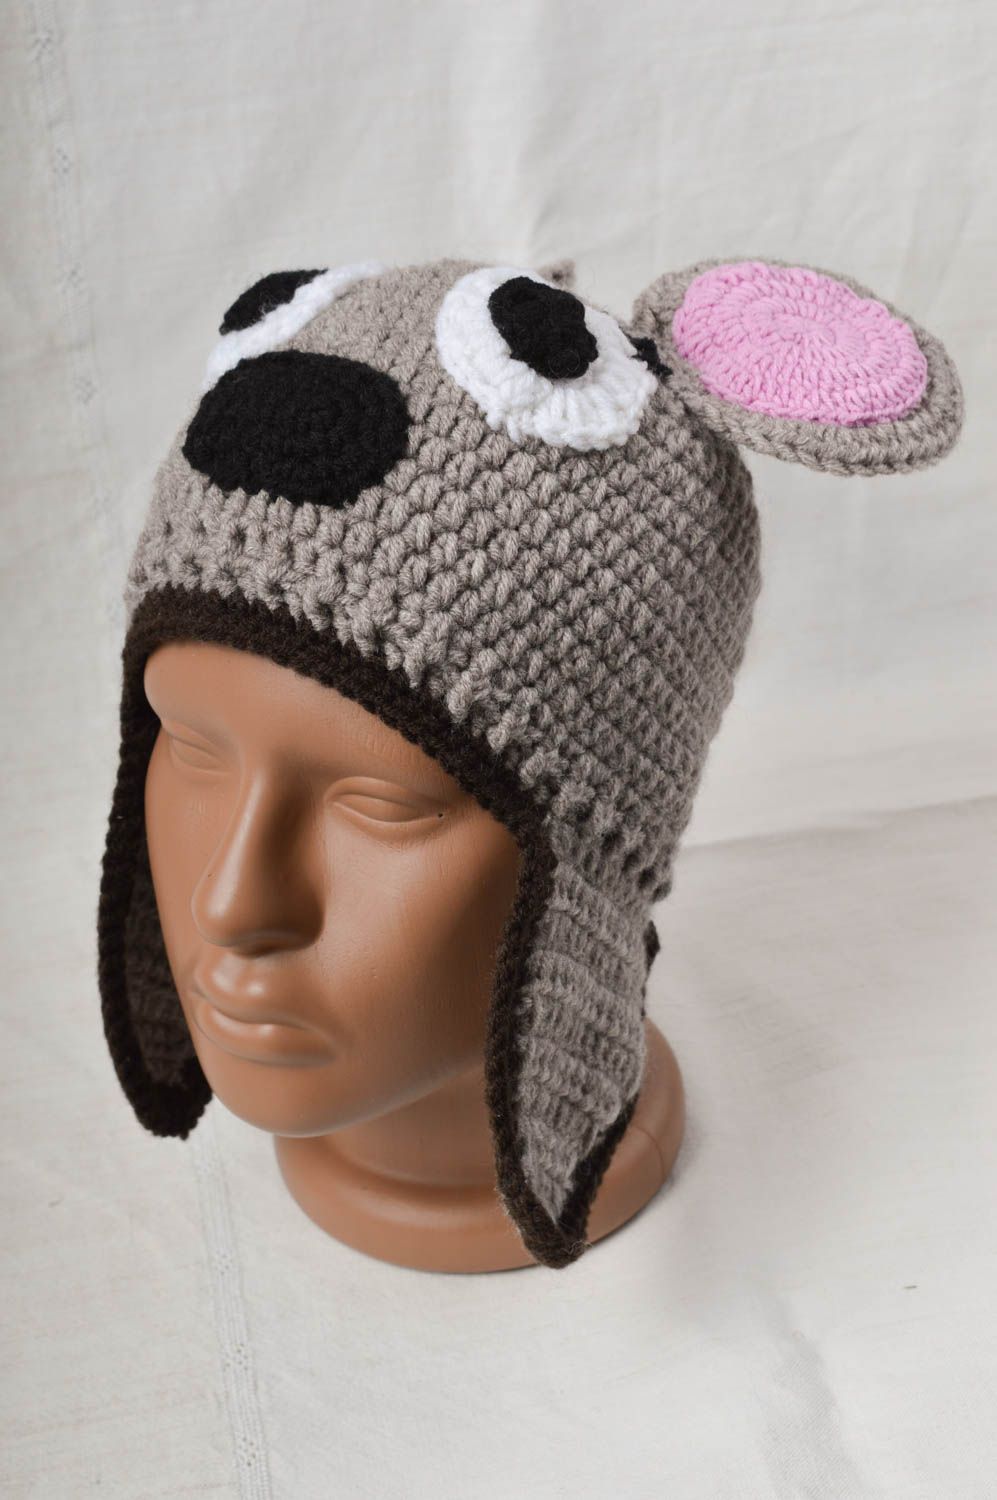 Beautiful handmade crochet hat childrens crocheted hat winter hat designs photo 1